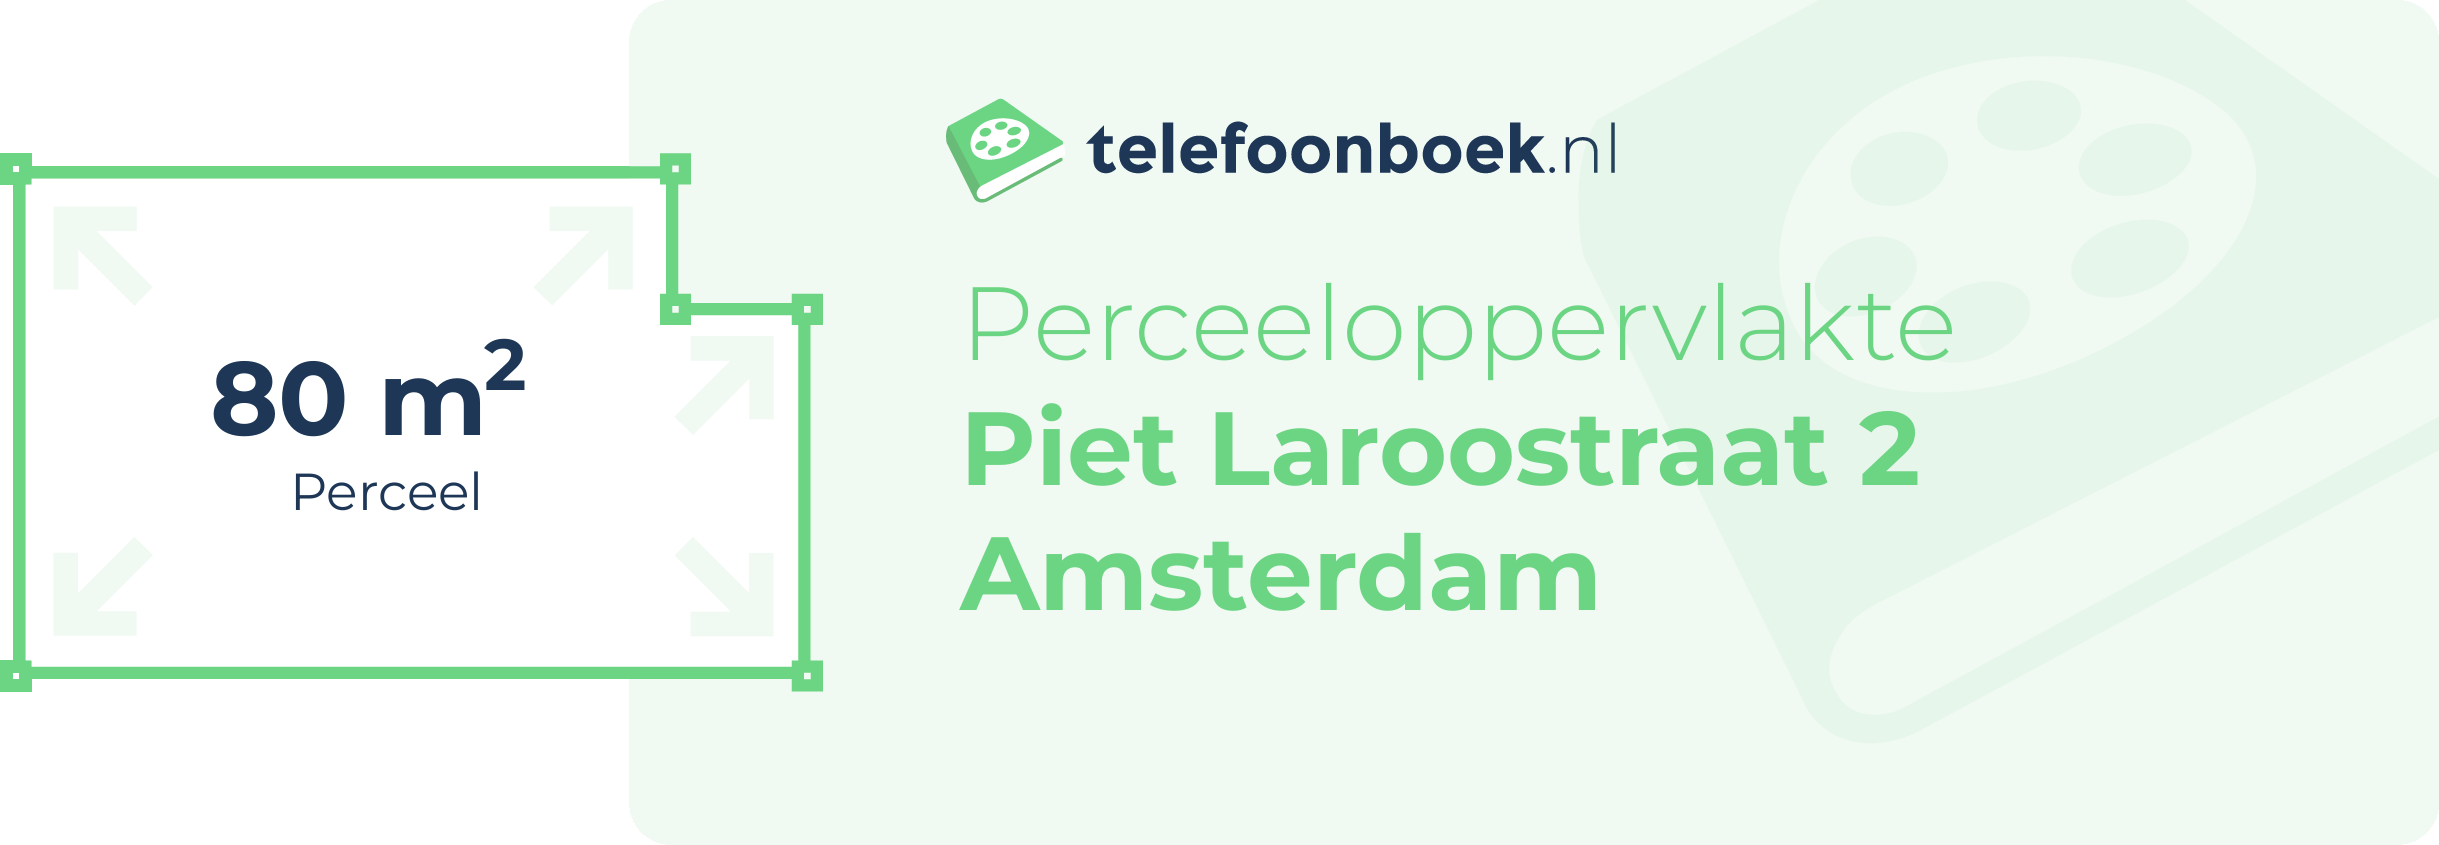 Perceeloppervlakte Piet Laroostraat 2 Amsterdam